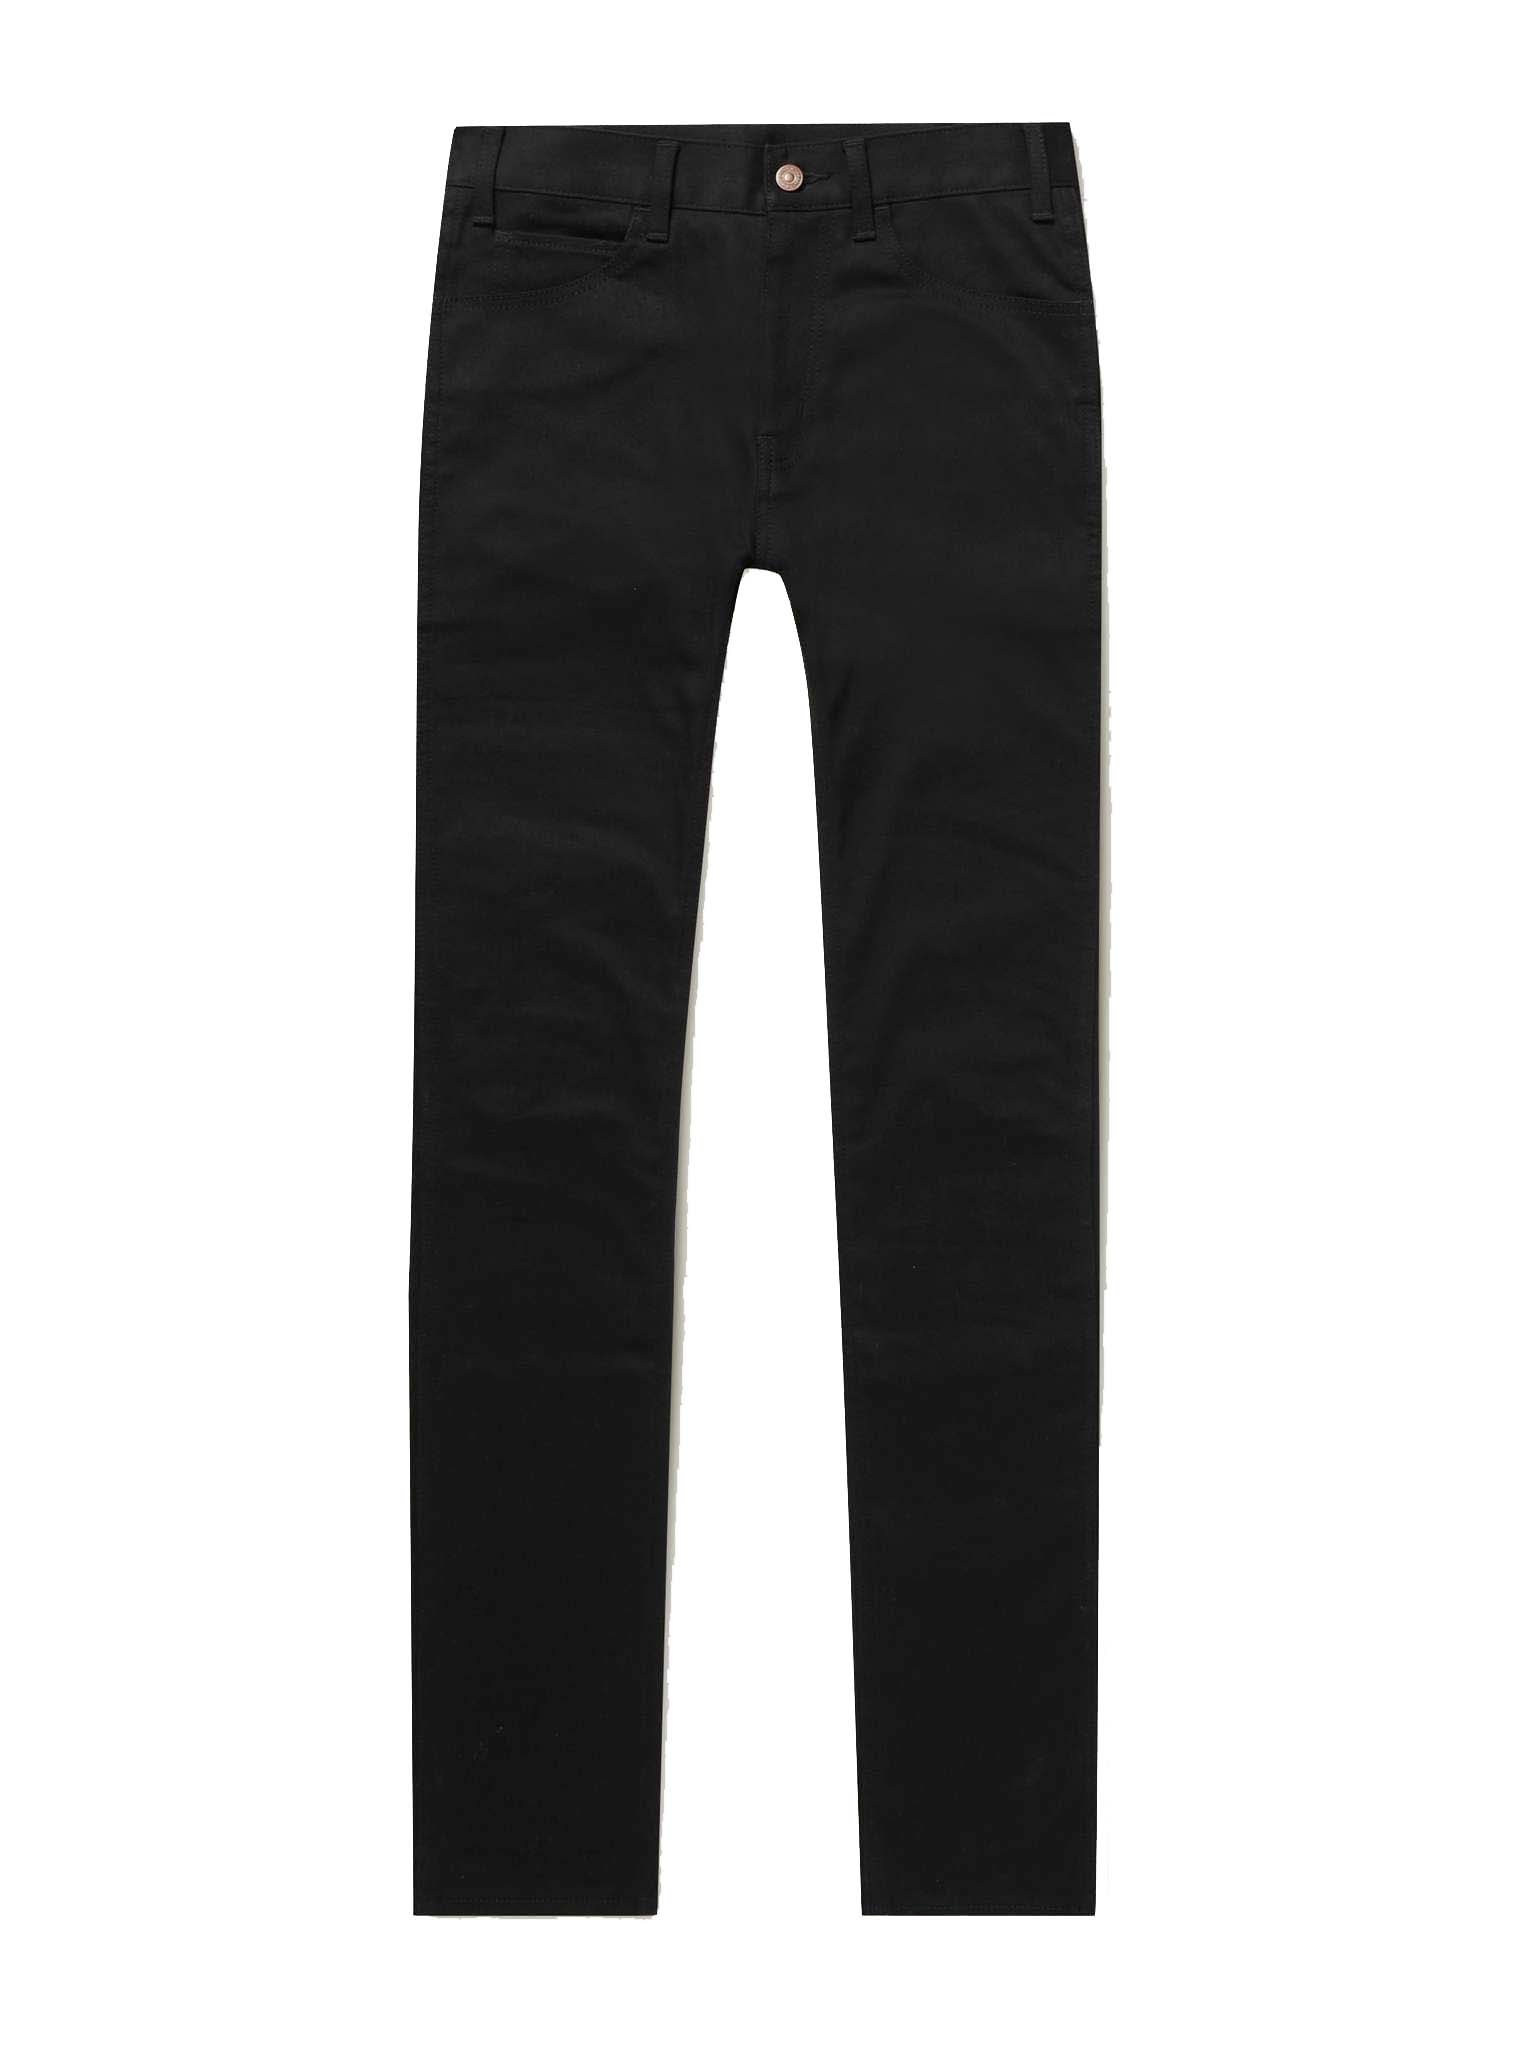 Levis Homer Campbell Vintage Clothing 501 Jeans Plain Denim Men's